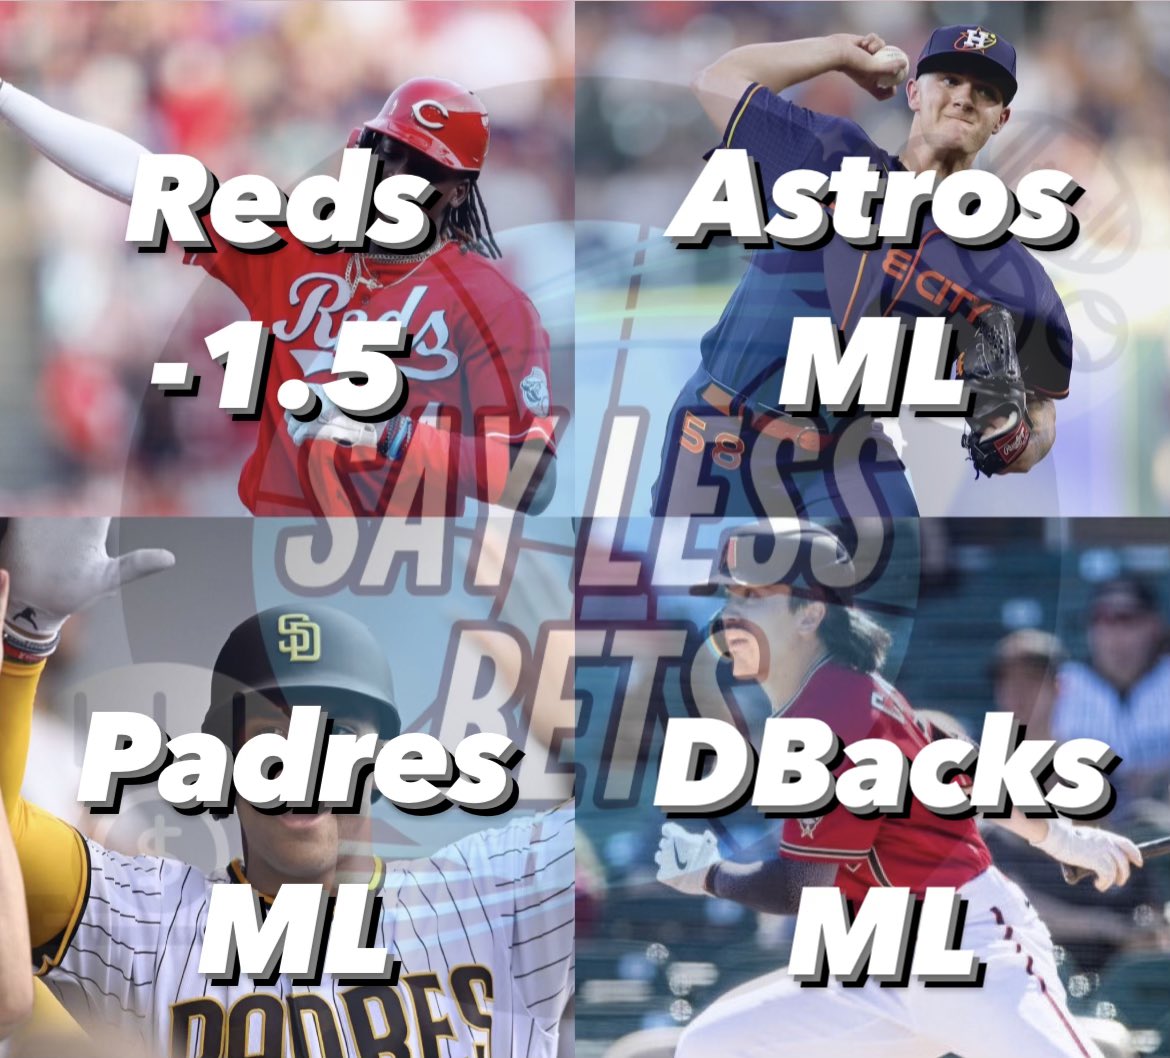 SAYLESS MONDAY🫡

Reds -1.5 +105(1u)👀💰
Astros ML -115(1u)👀💰
Padres ML -115(1u)👀💰
Dbacks ML -105(1u)👀💰

4 plays for Monday🔥SayLess y’all already know what to do🤫 #GamblingTwitter